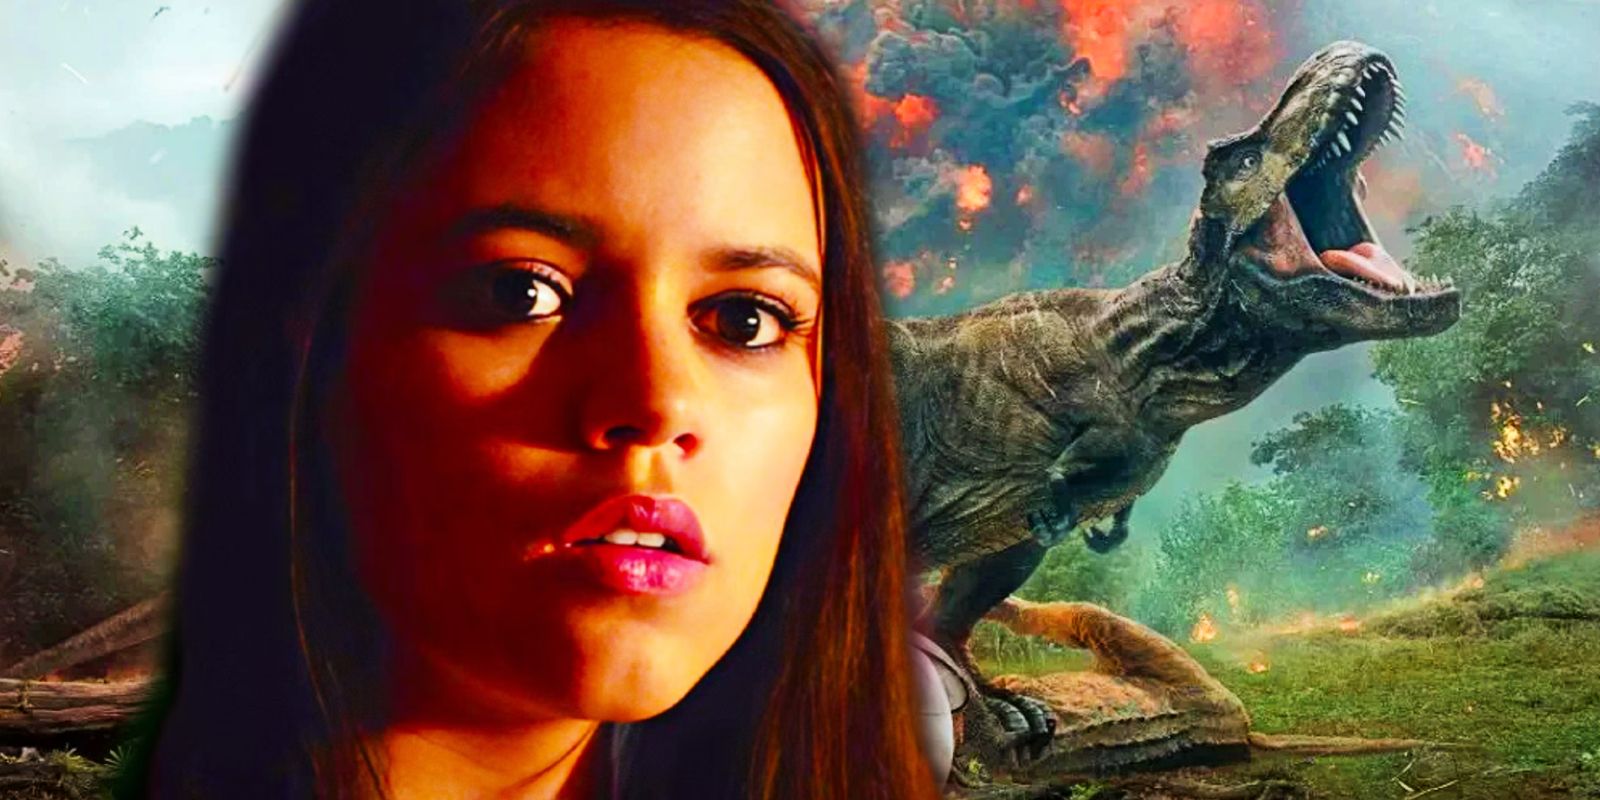 Jenna Ortega in front of Jurassic World: Fallen Kingdom poster